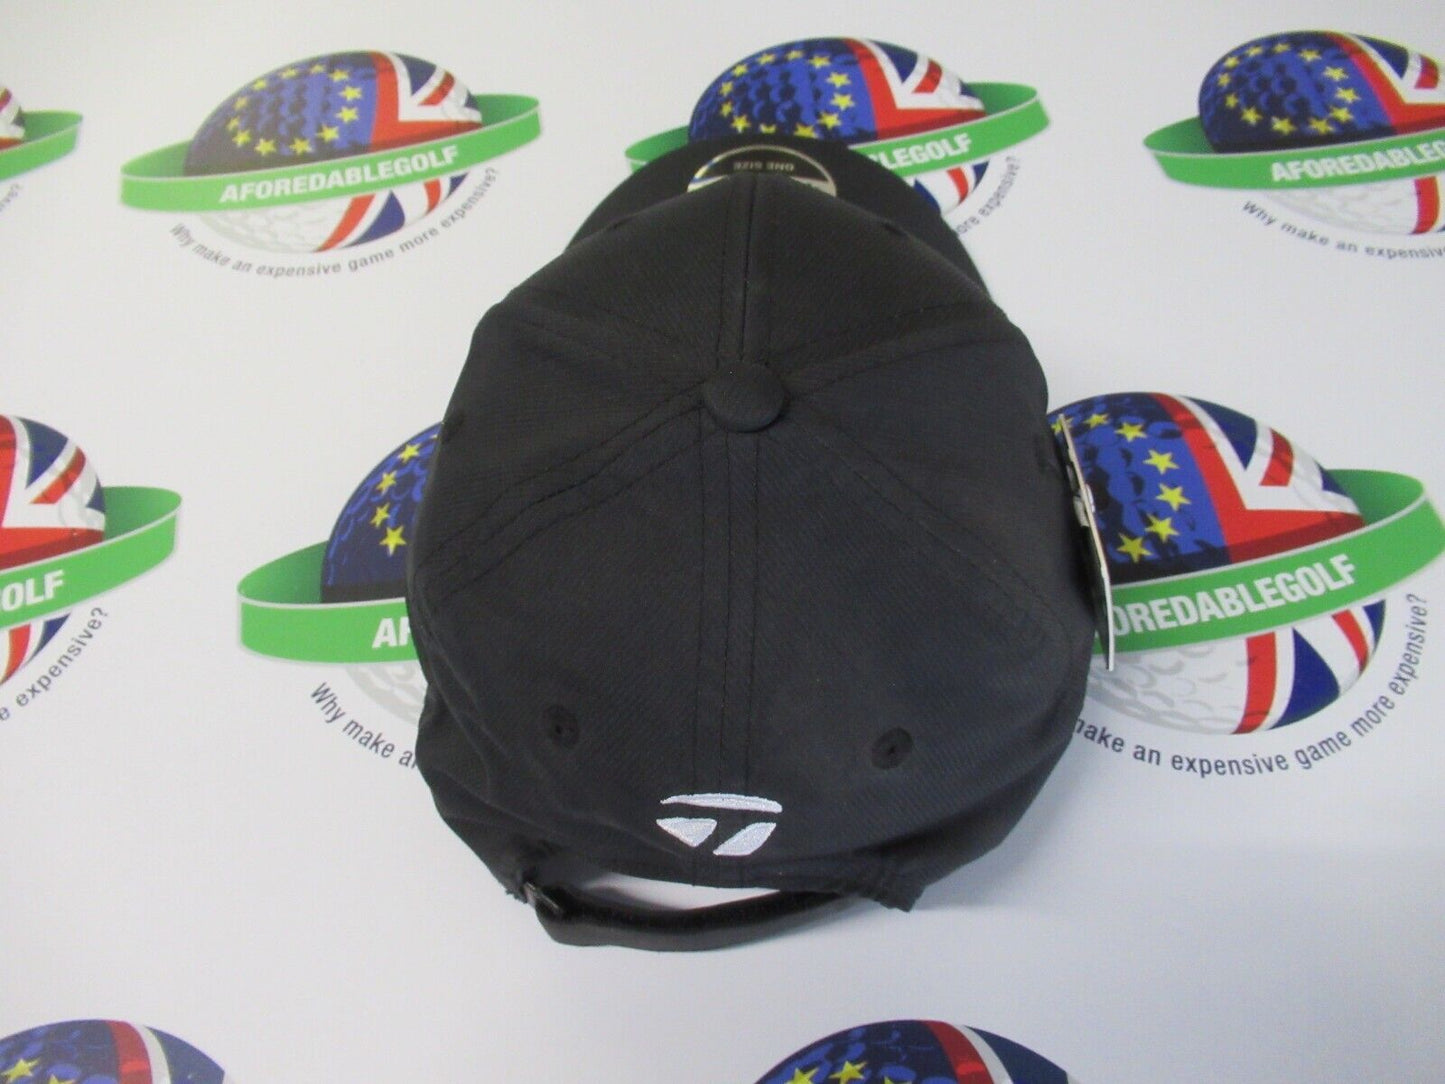 taylormade tour radar black adjustable golf cap tp5 m5